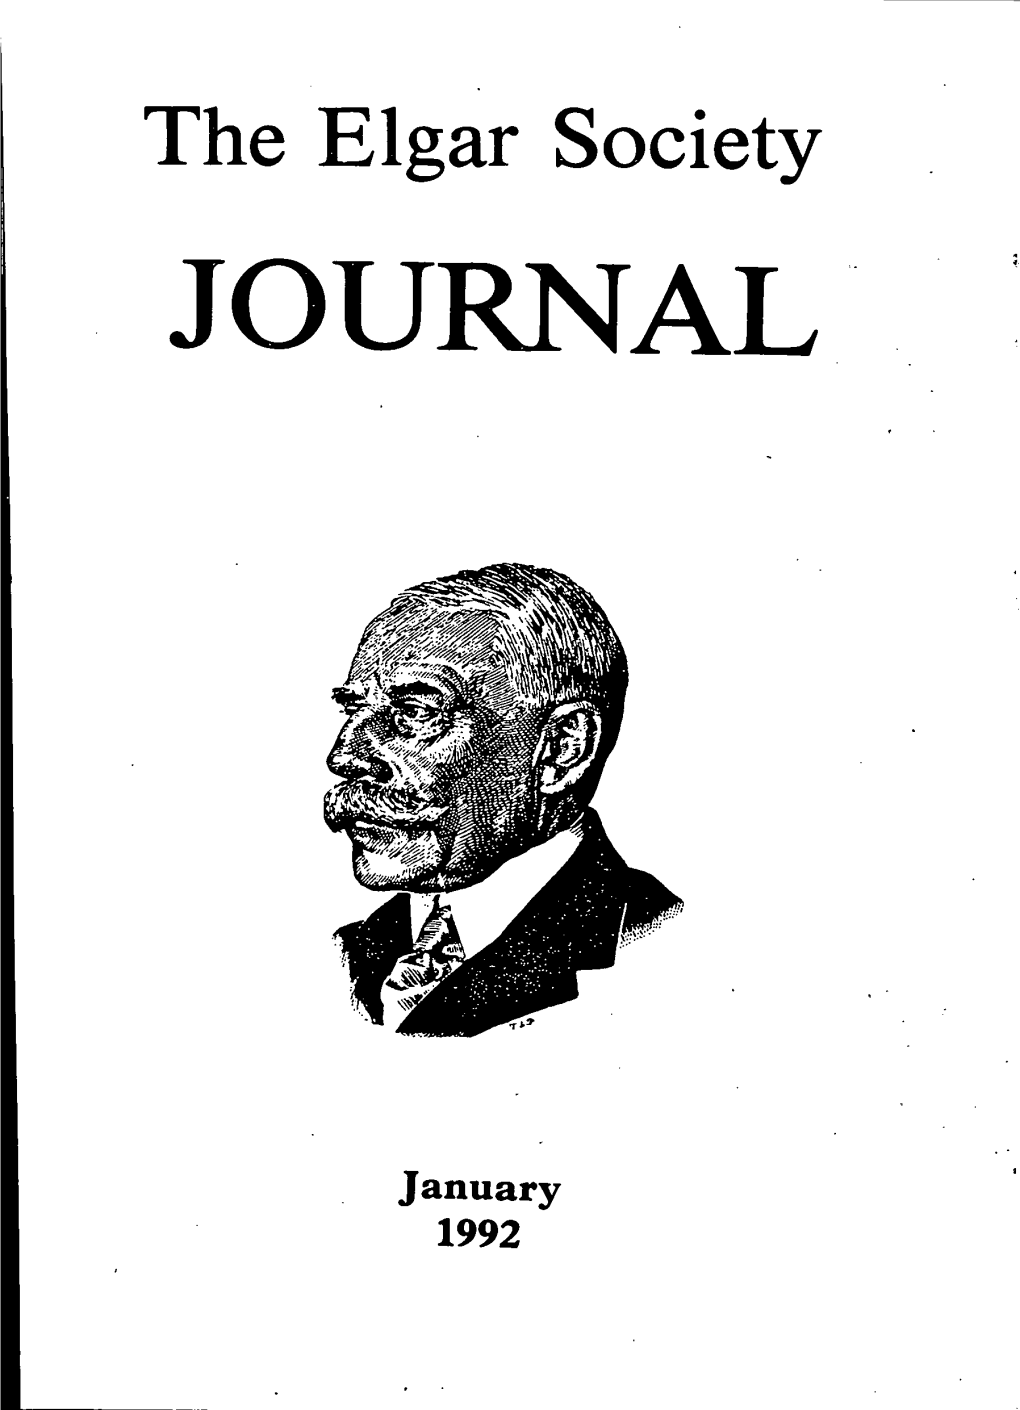 Journal January 1992